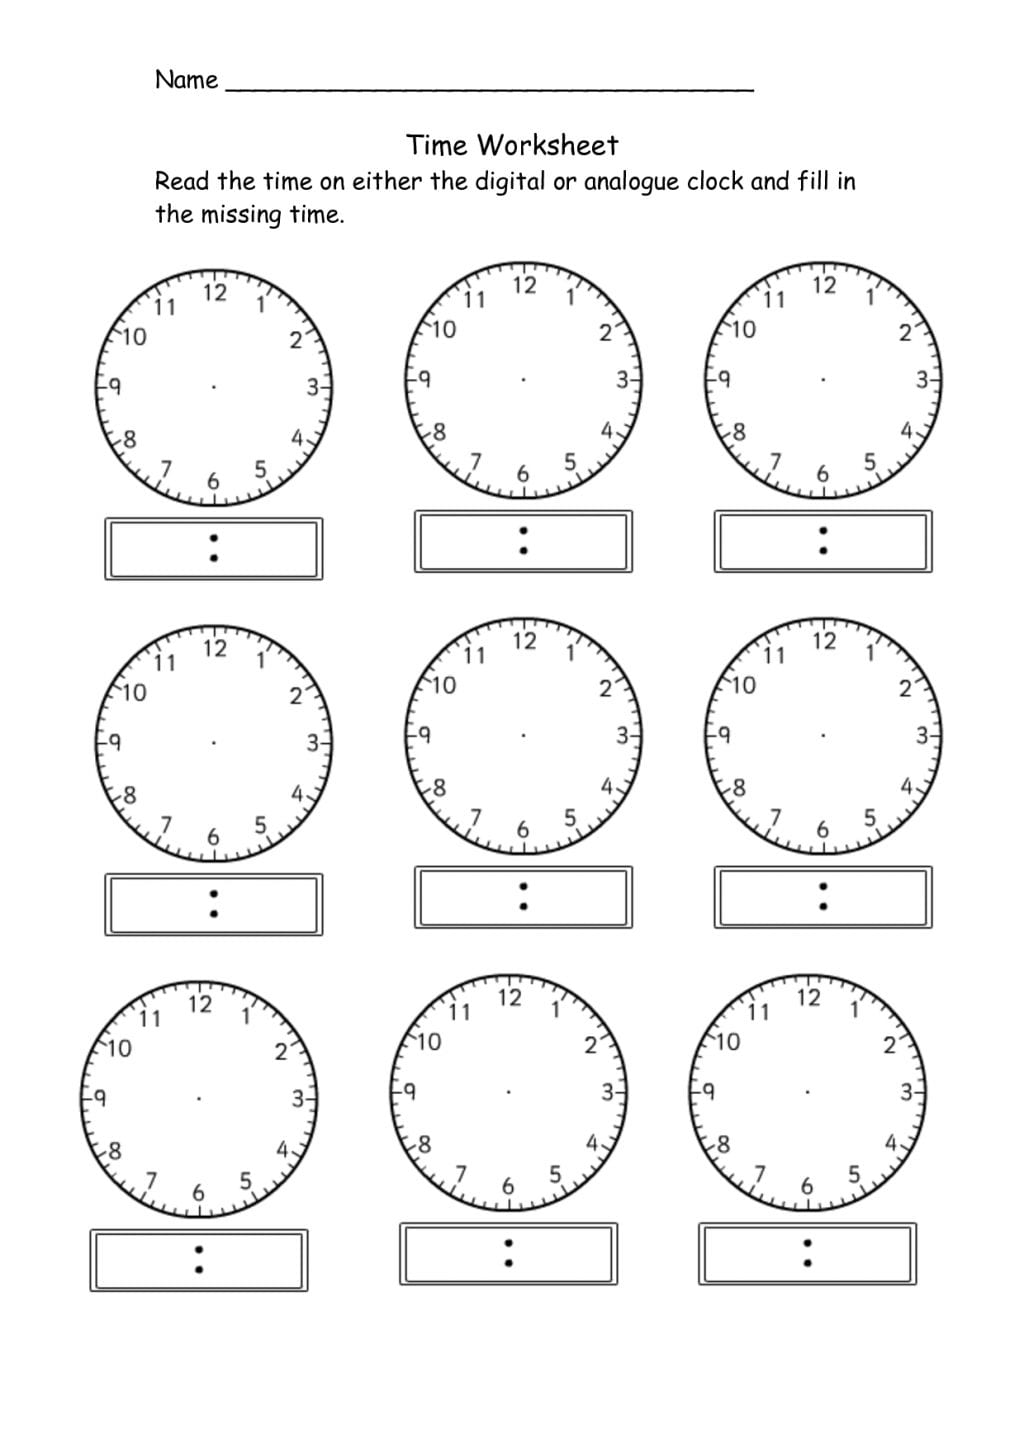 Worksheet Ideas Analogue Clock Worksheets Incredible Db excel